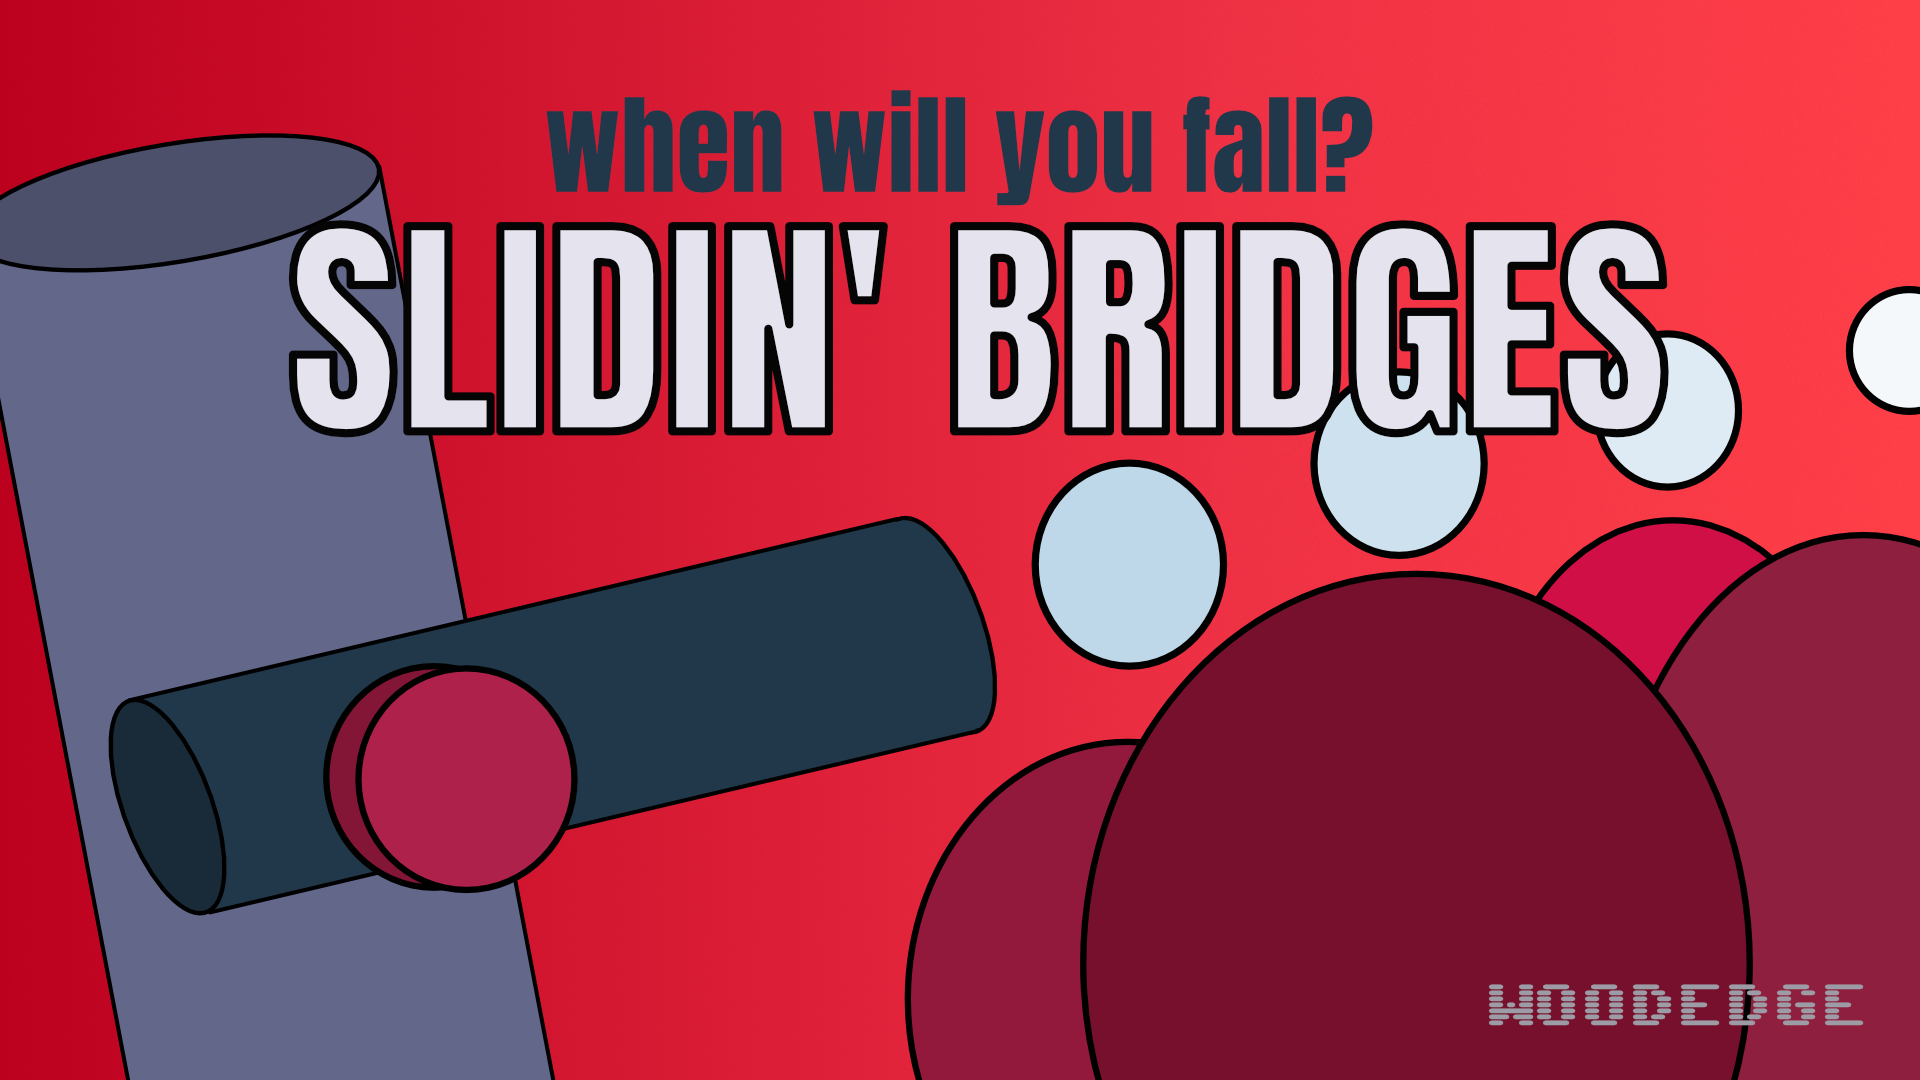 SLIDIN' BRIDGES